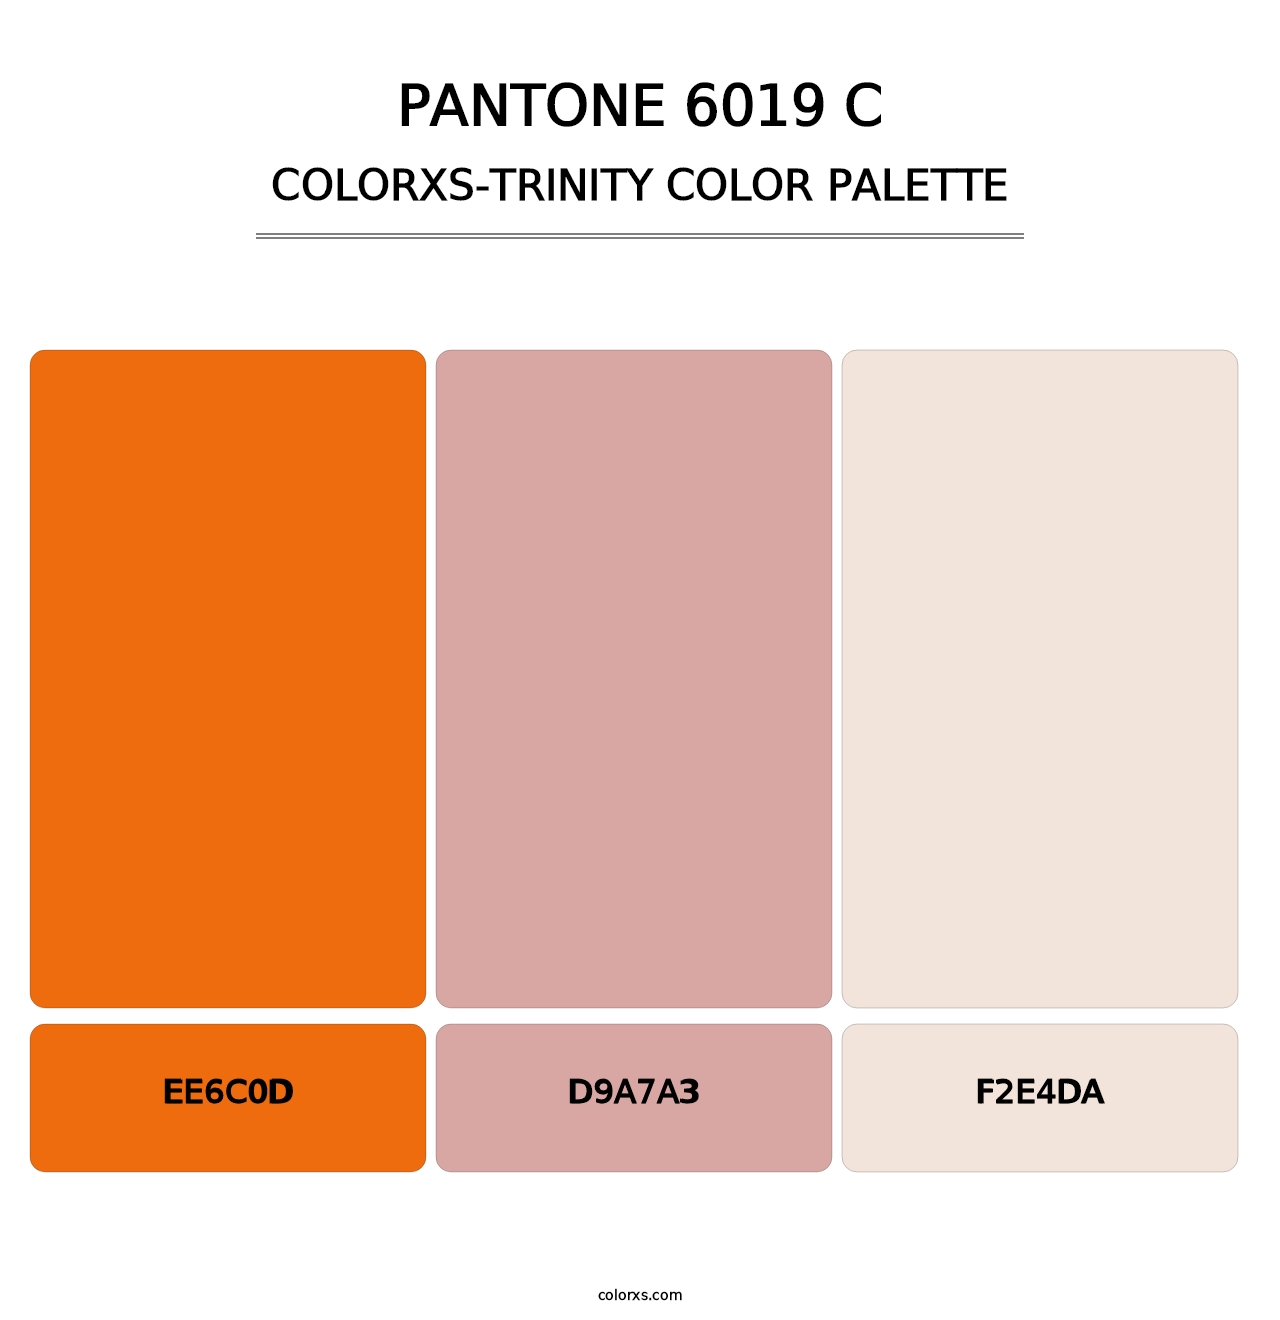 PANTONE 6019 C - Colorxs Trinity Palette